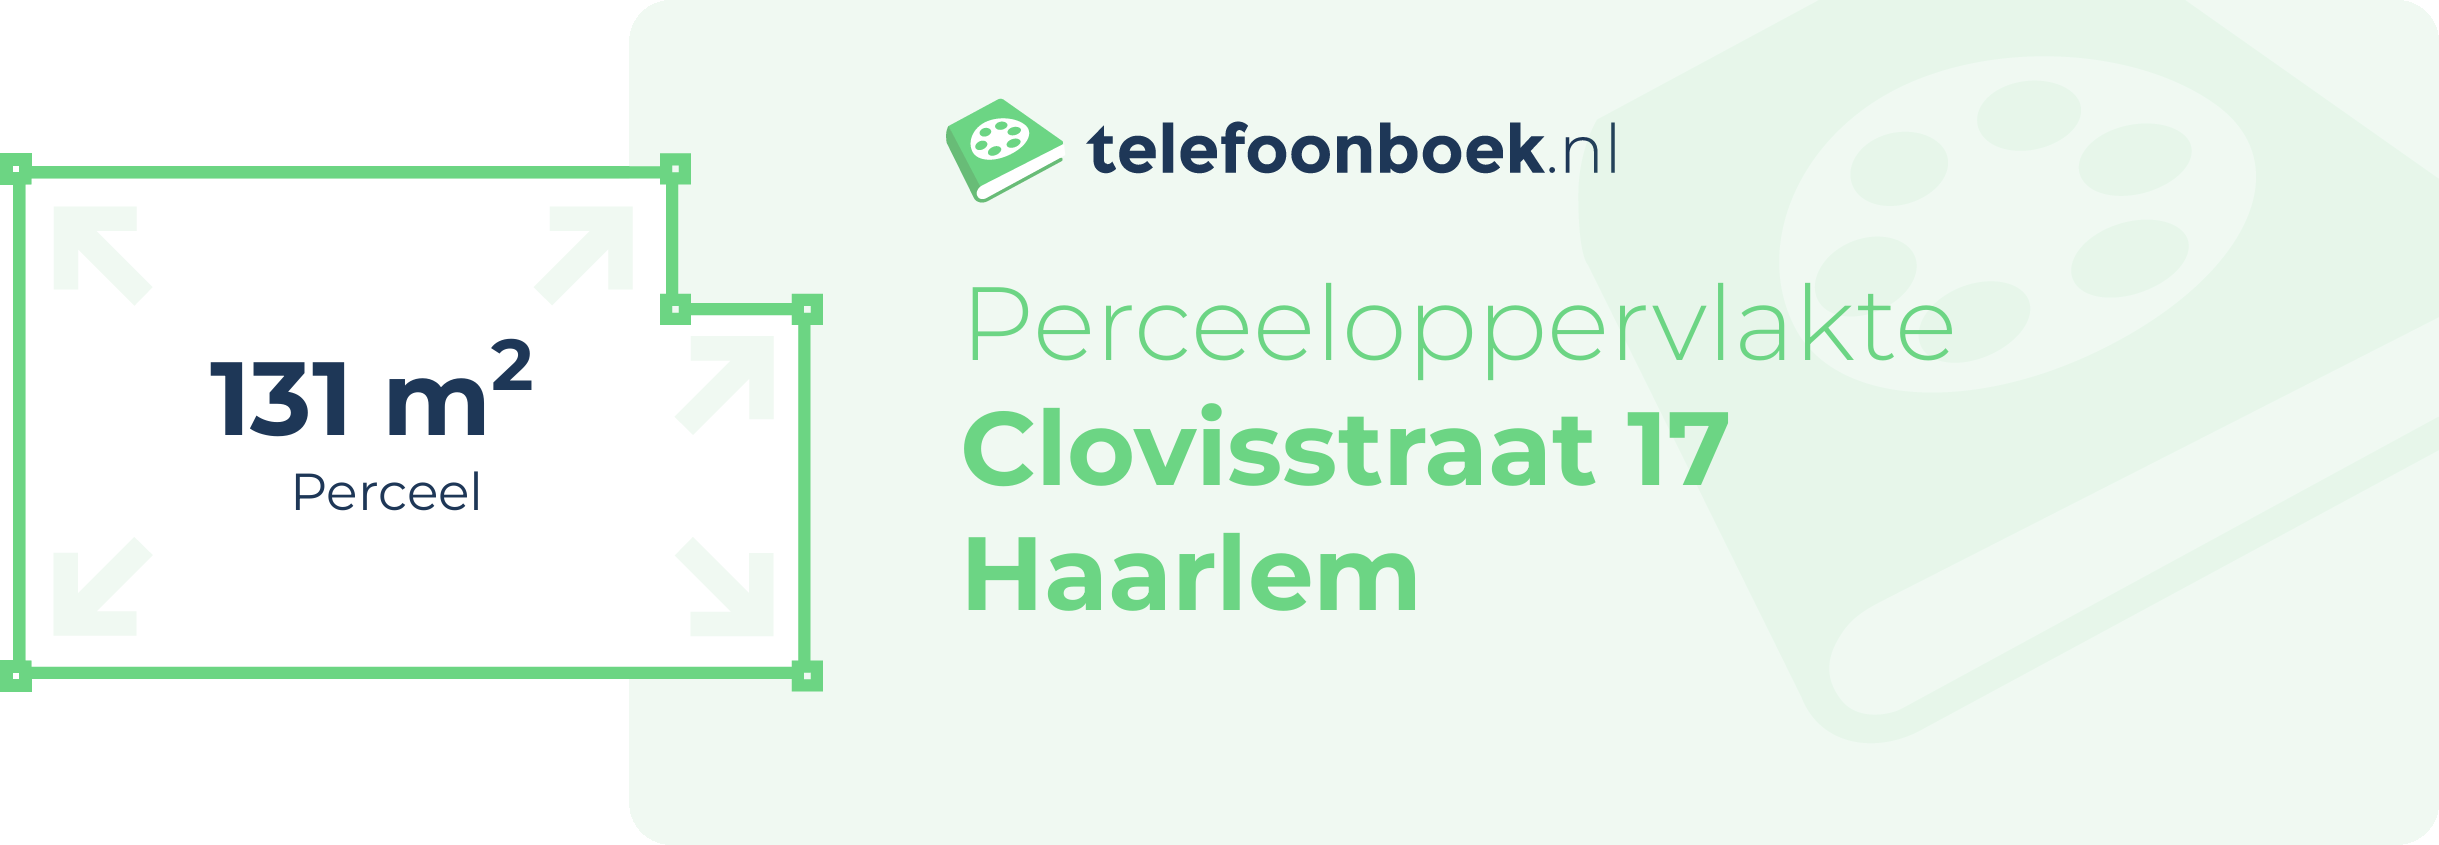 Perceeloppervlakte Clovisstraat 17 Haarlem